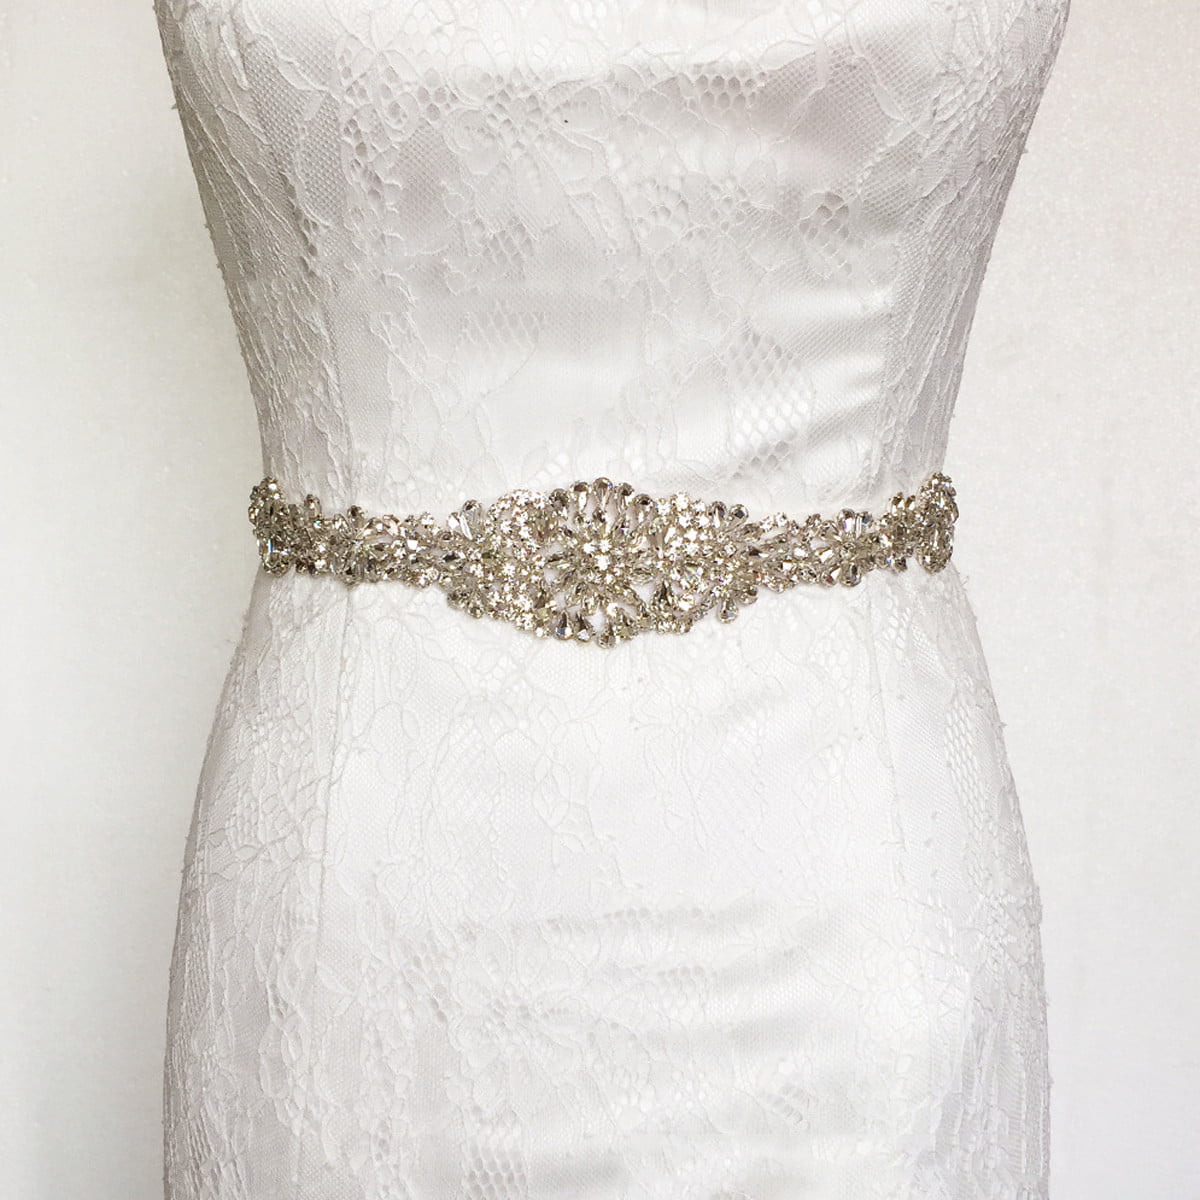 Rhinestone Beaded Applique Wedding Bridal Dress Belt Sash Ribbon Waistband DIY